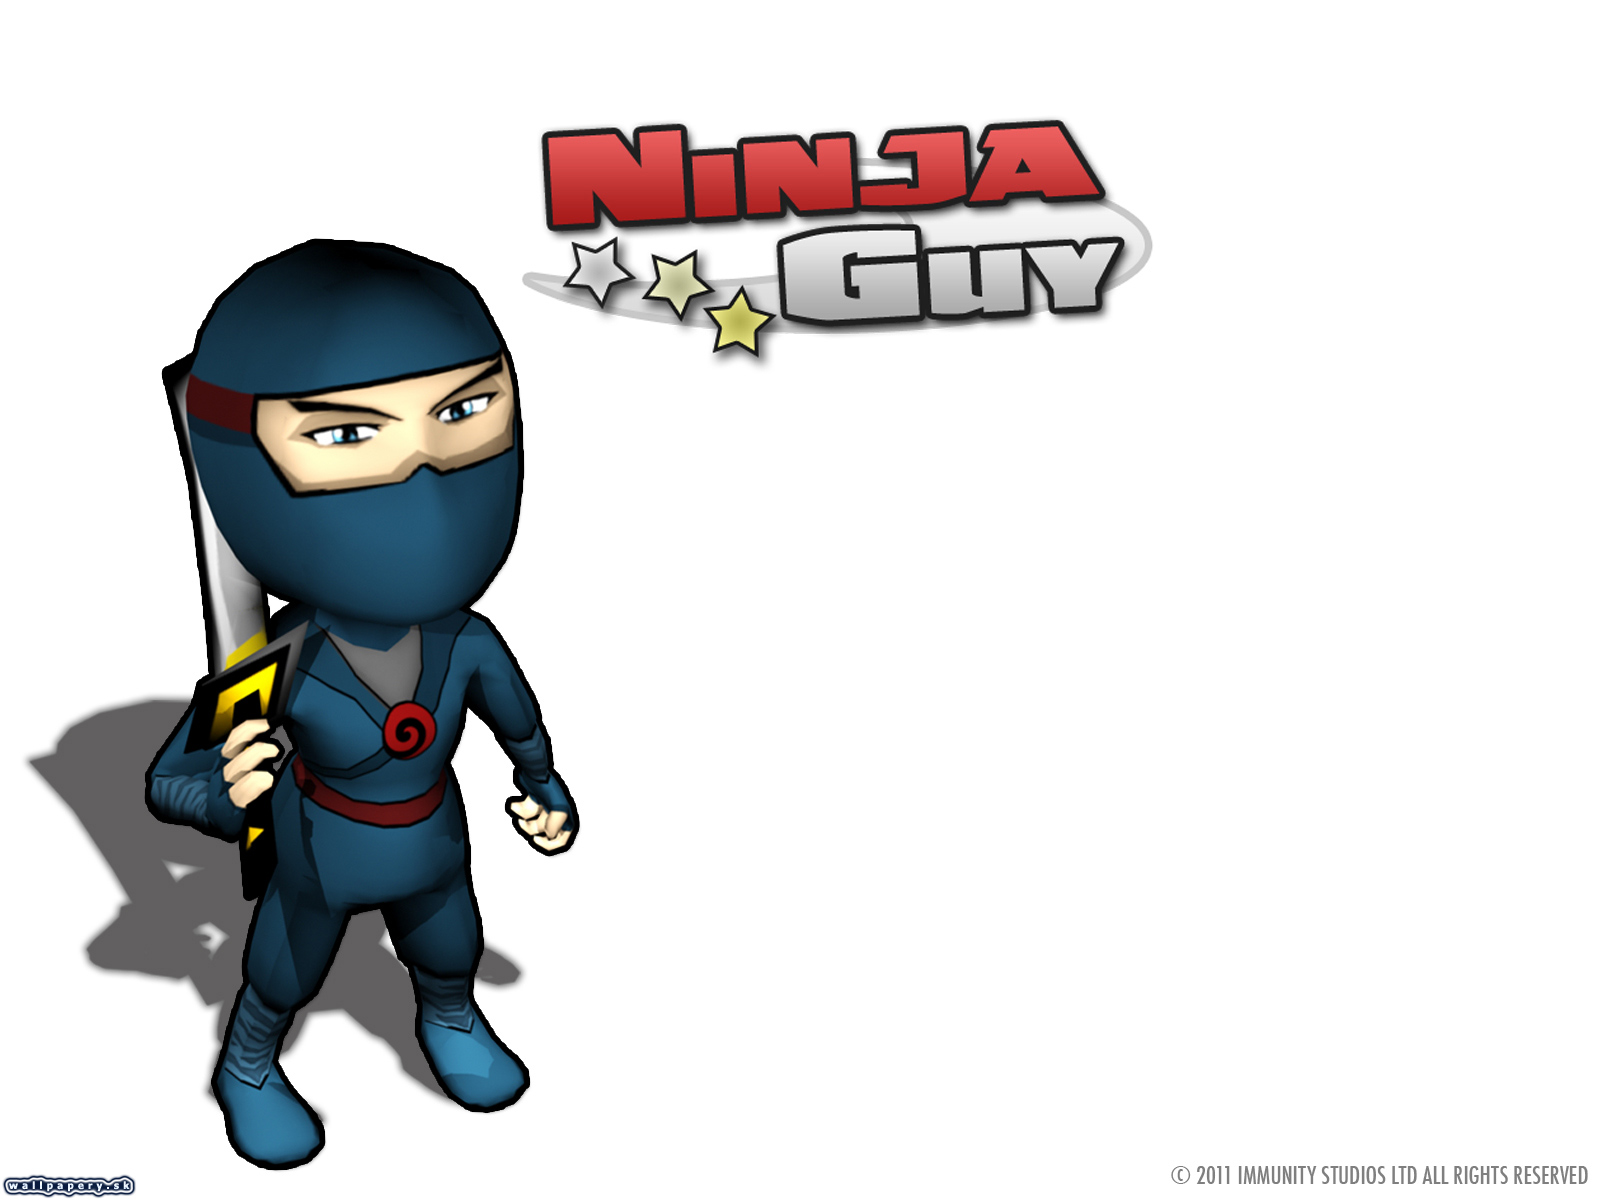 Ninja Guy - wallpaper 4